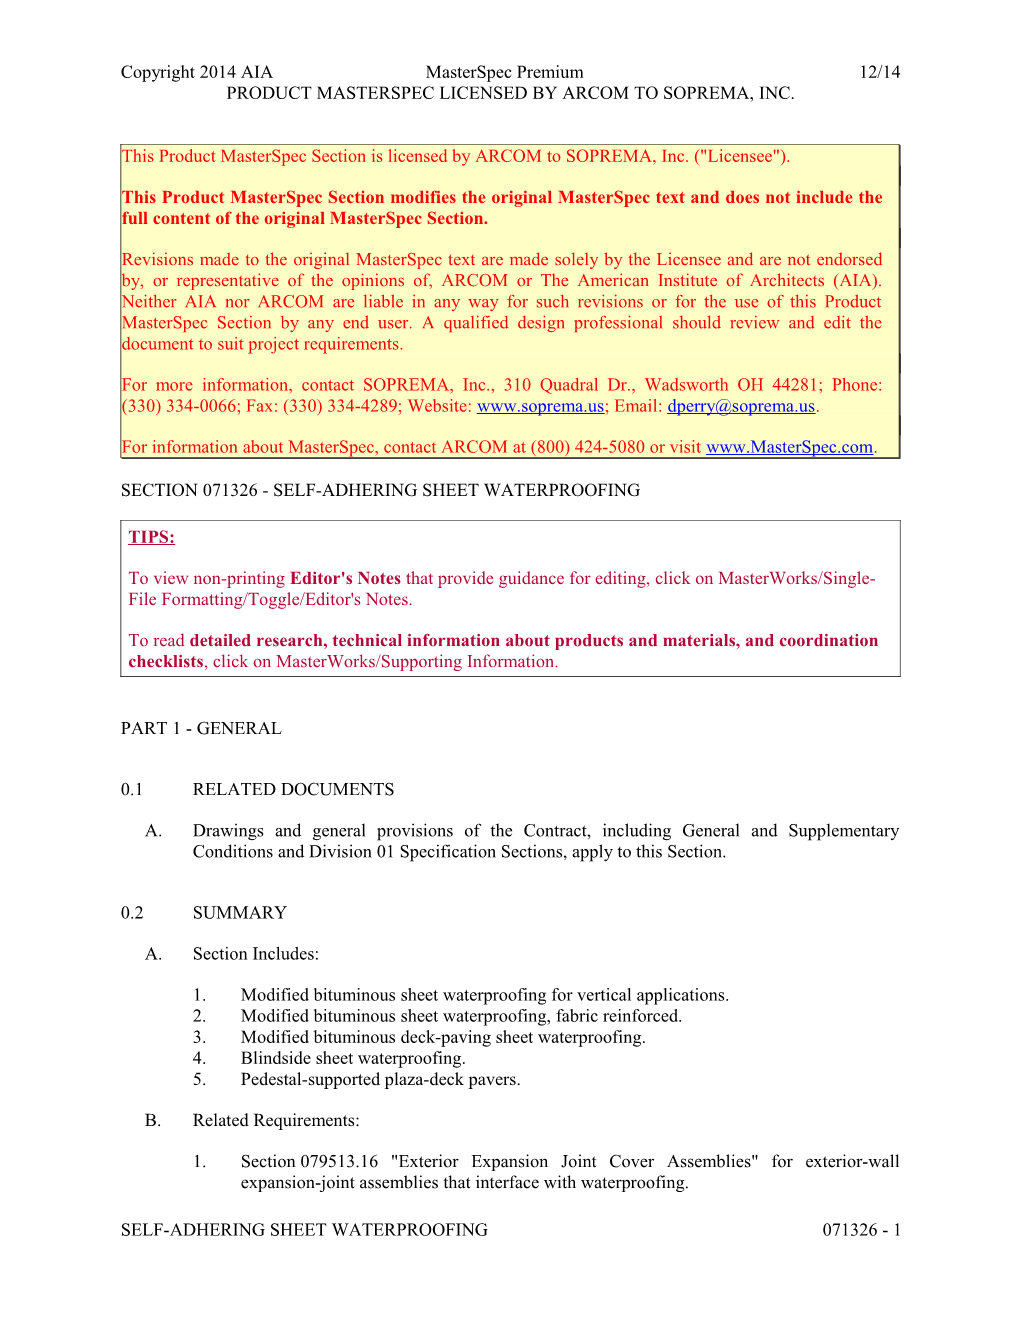 Section 071326 - Self-Adhering Sheet Waterproofing